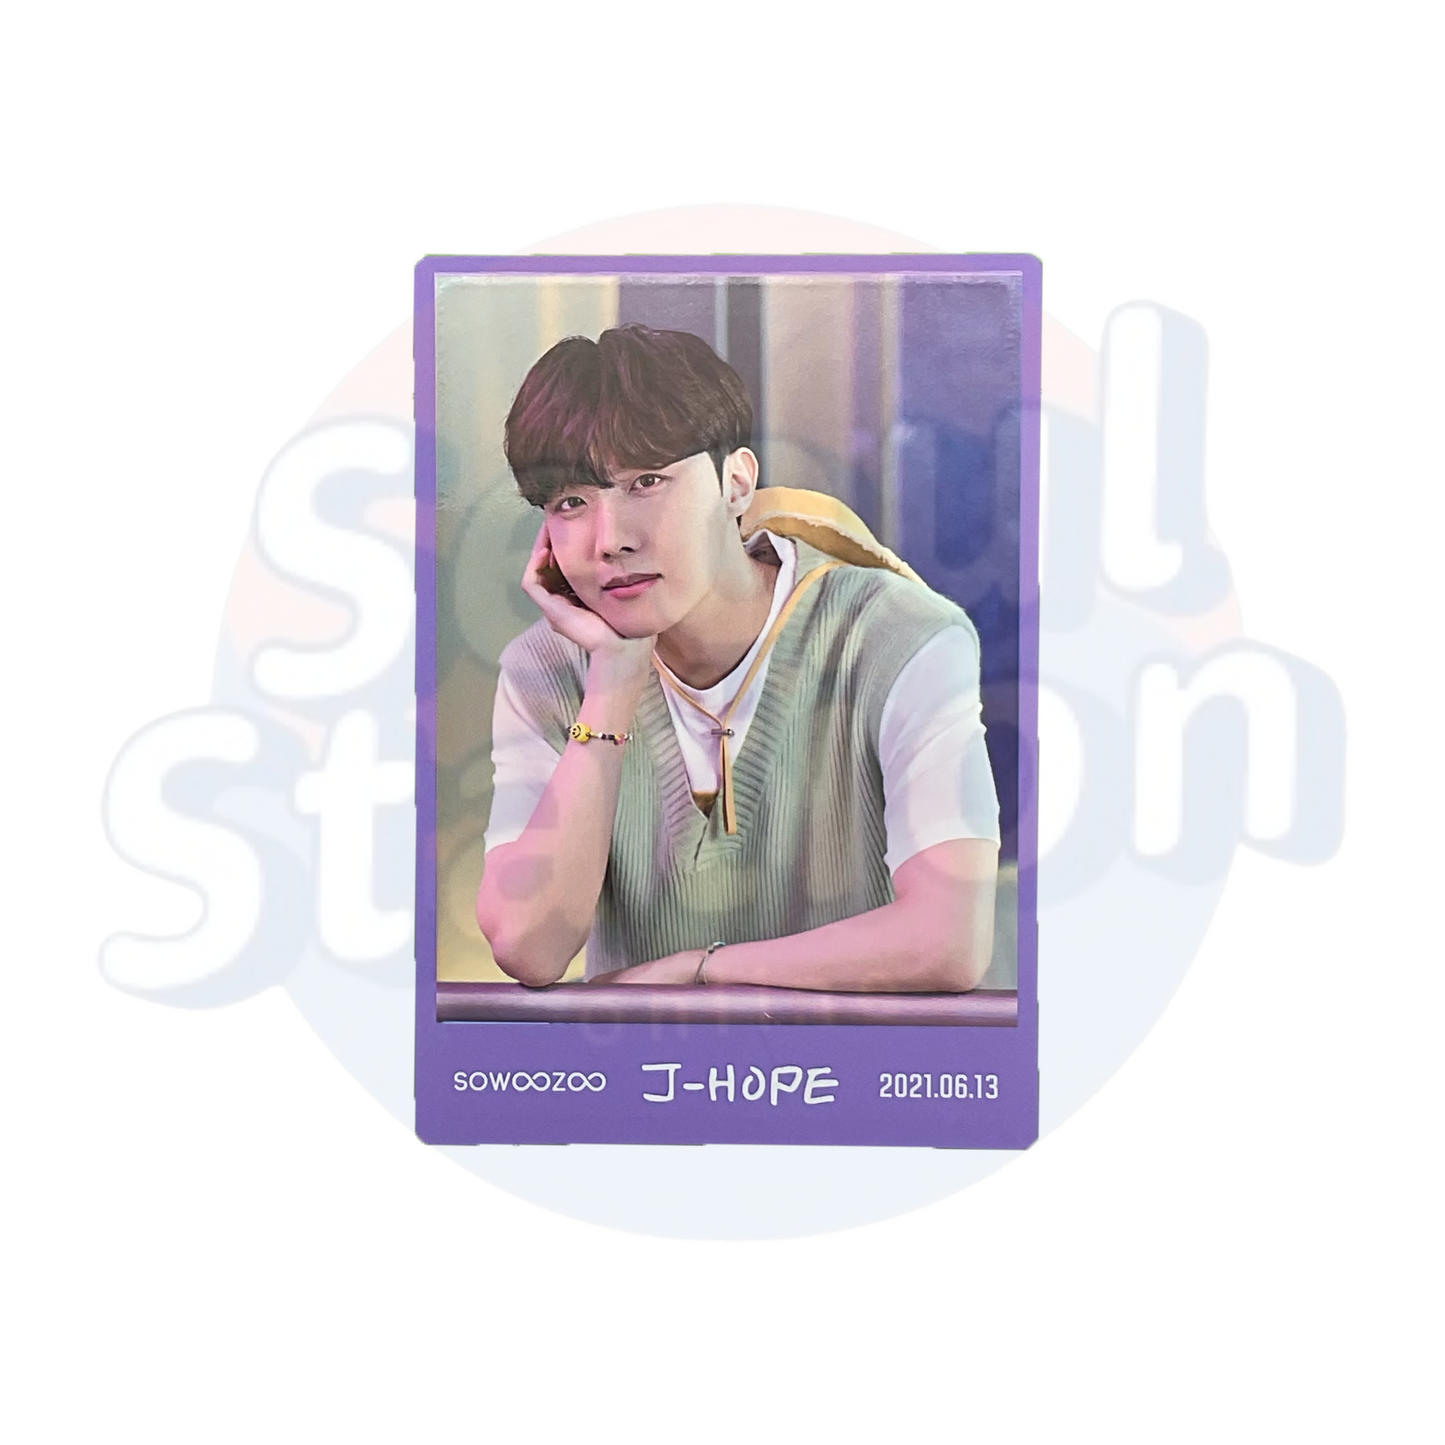 BTS - 2021 Muster SOWOOZOO - Mini Photo Card - J-Hope Version 1/8